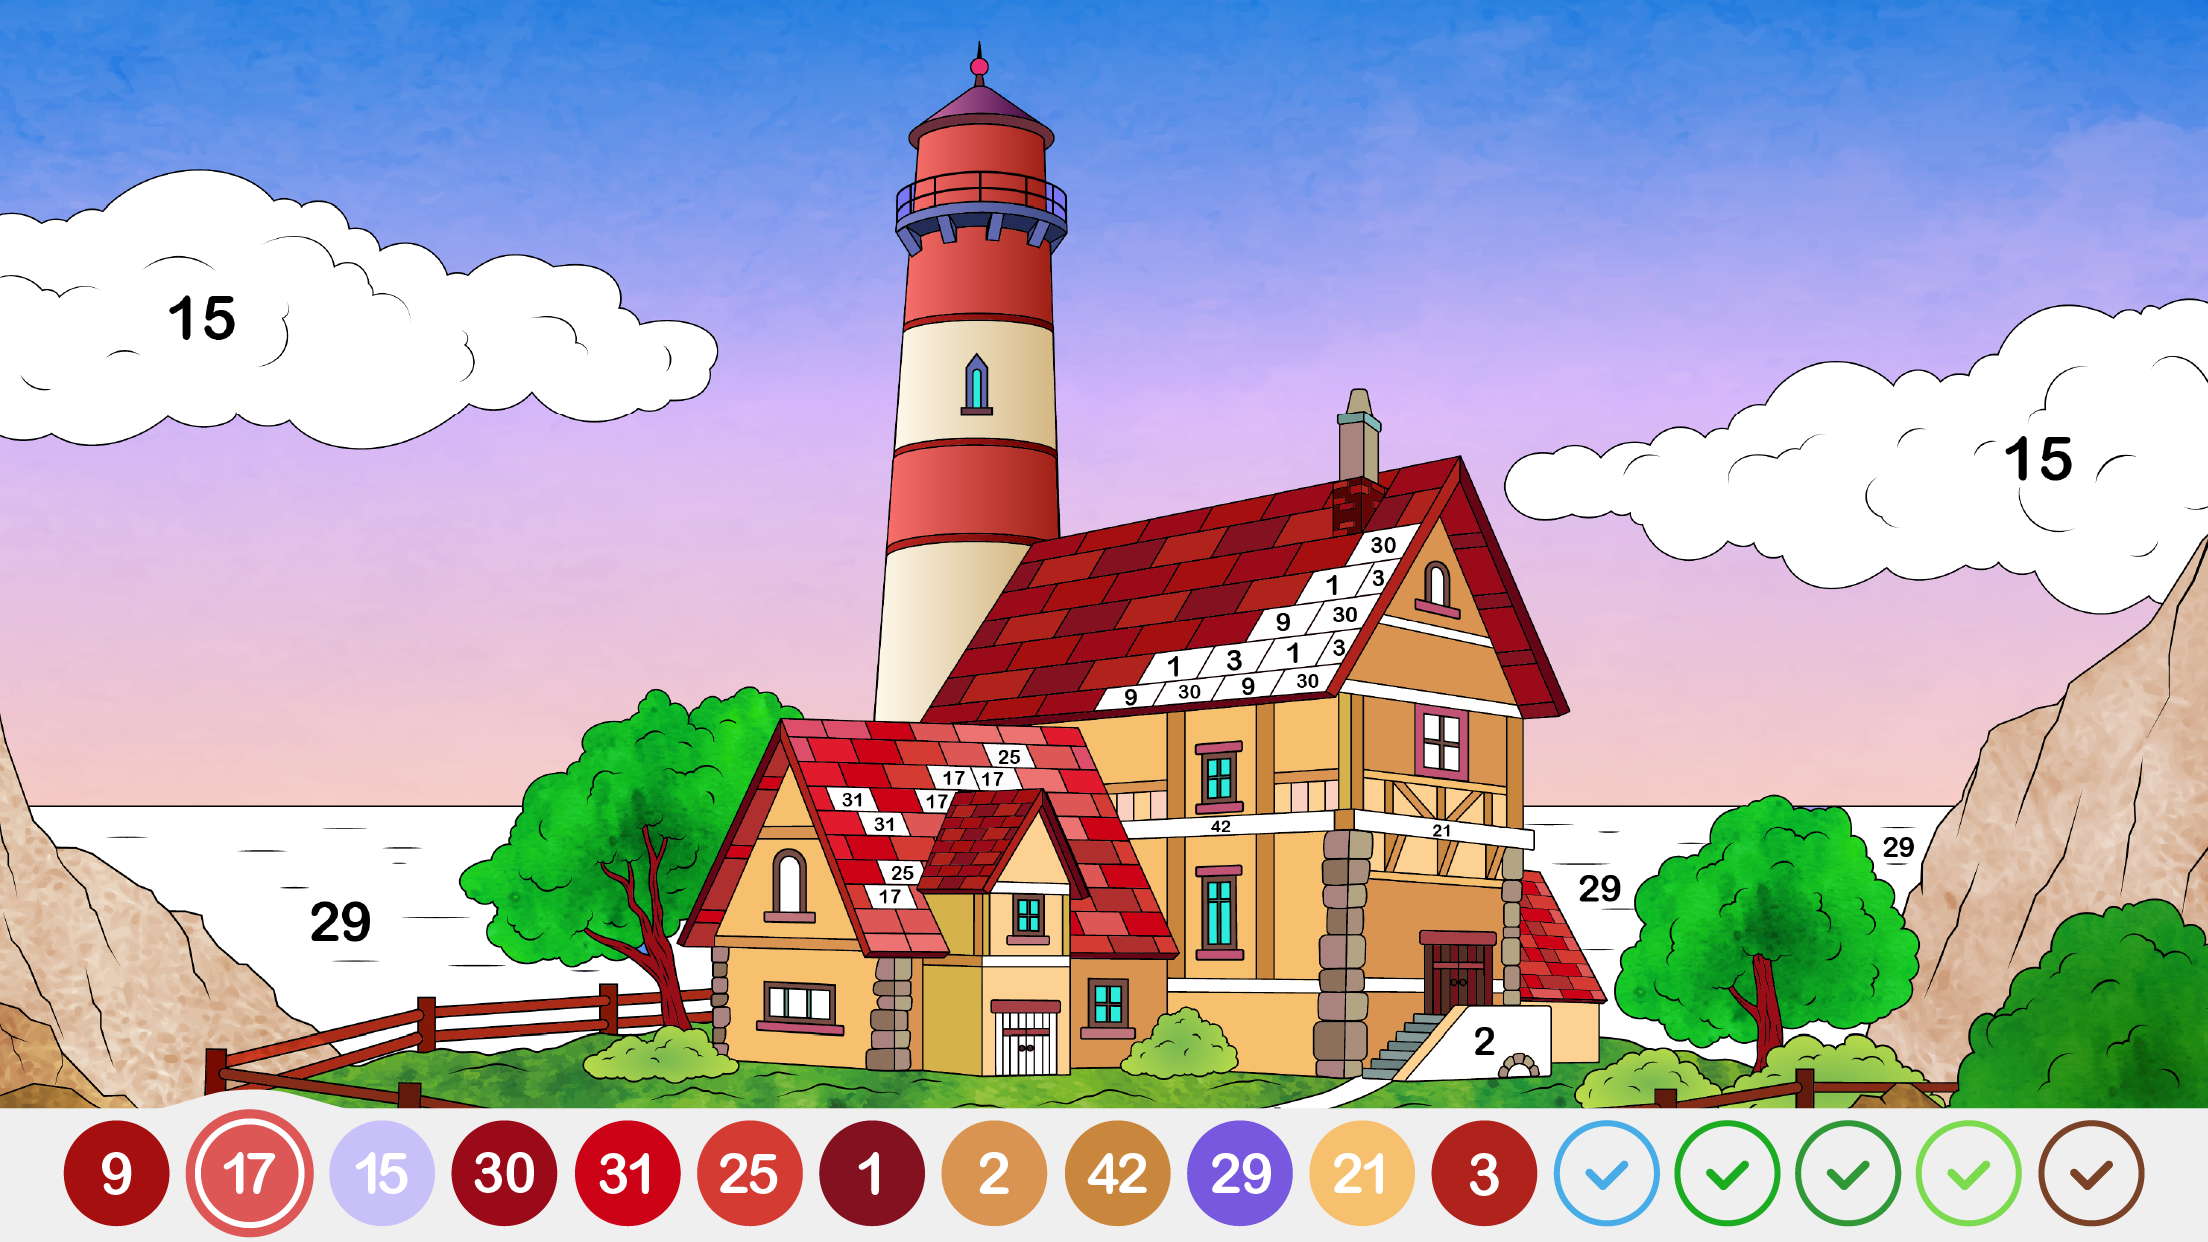 Jogos de colorir - cor feliz APK (Android Game) - Baixar Grátis